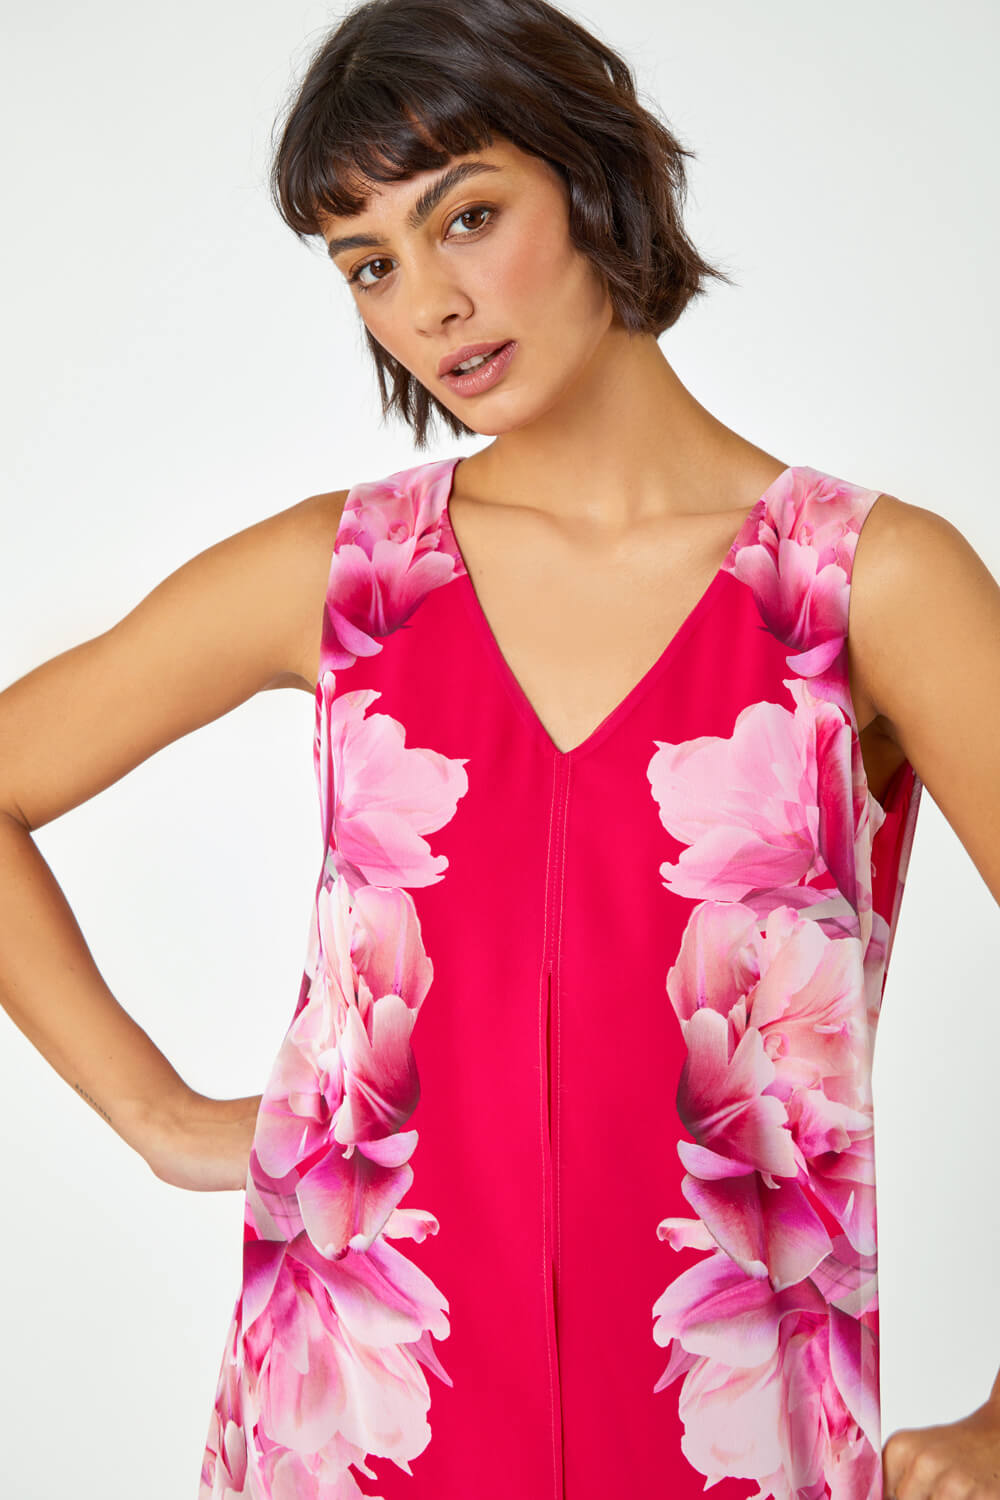 PINK Sleeveless Floral Chiffon Overlay Dress, Image 4 of 5